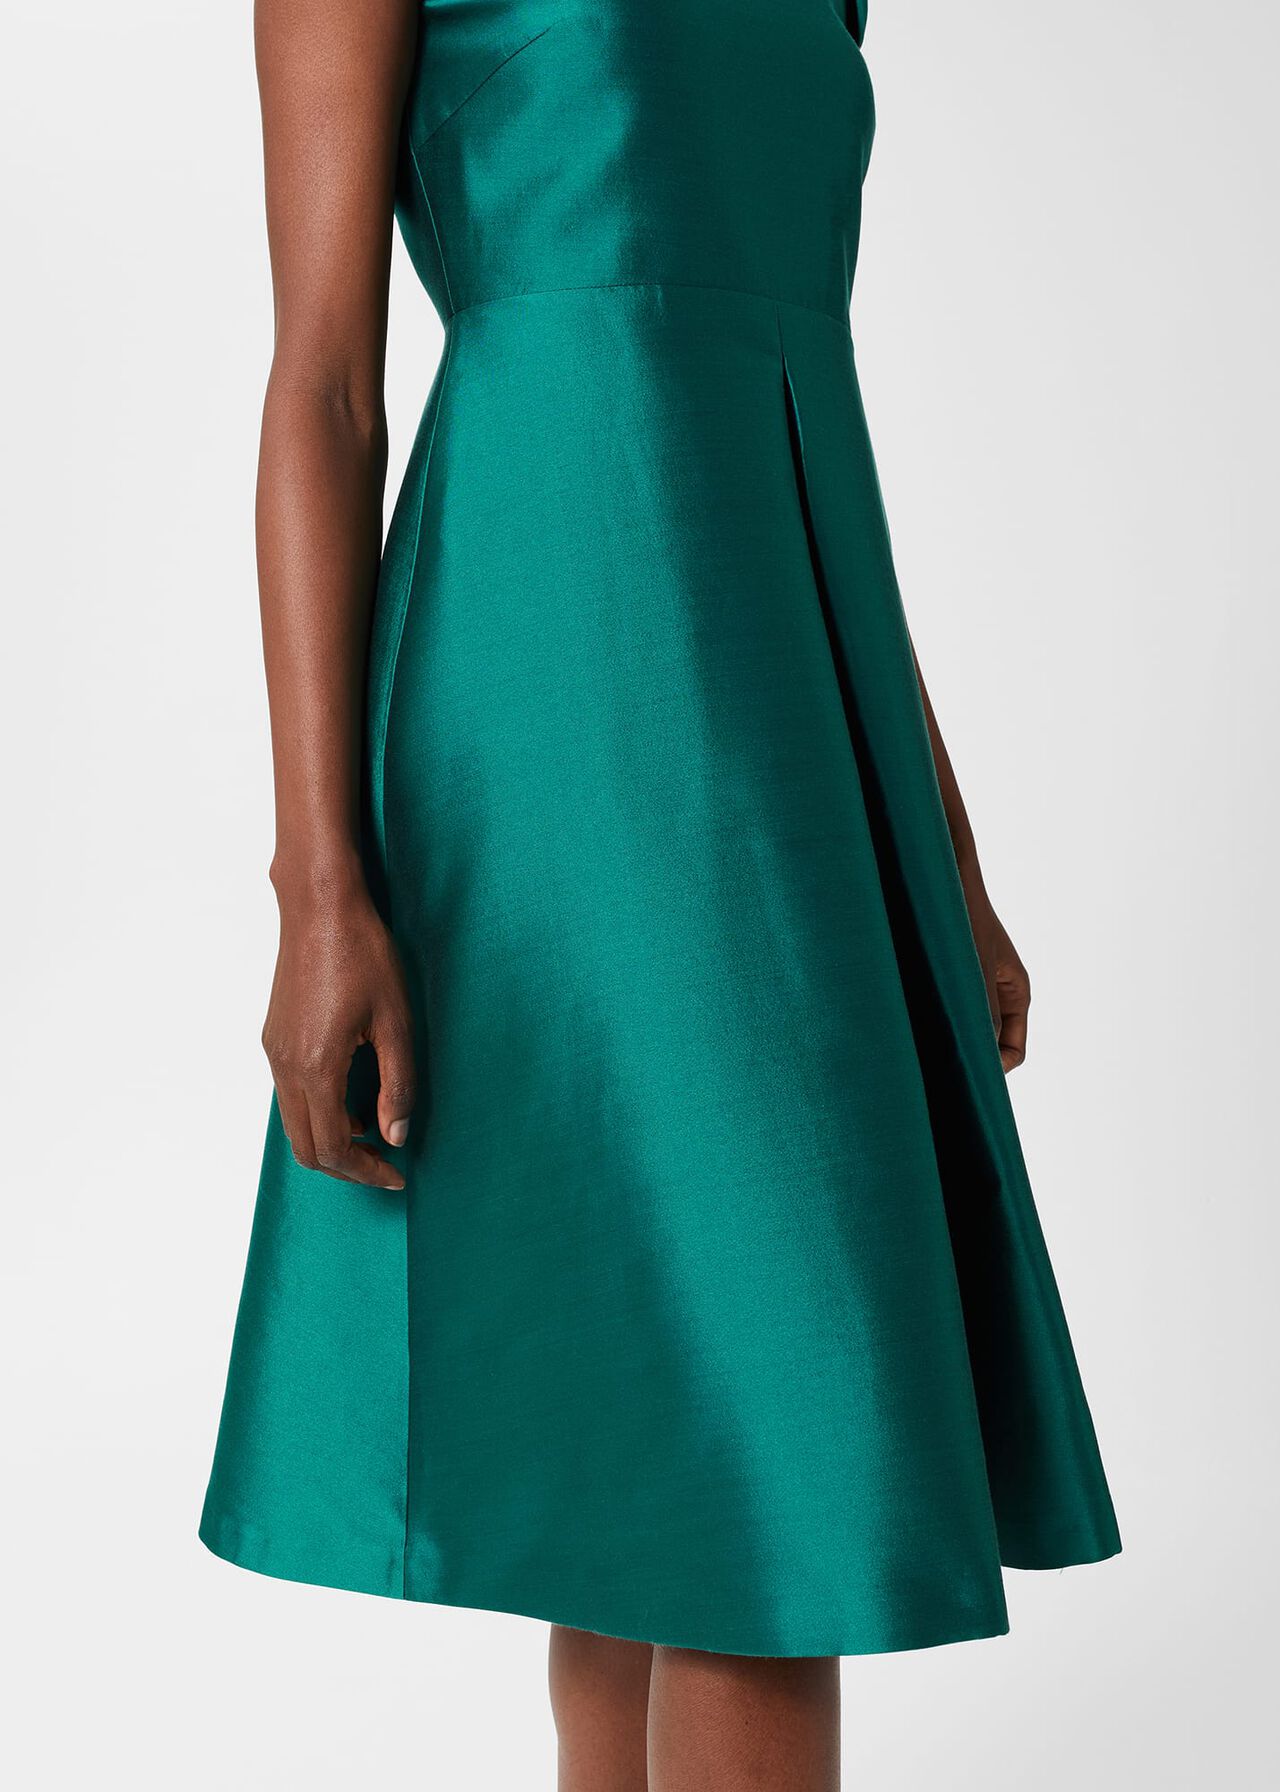 Christie Silk Blend Dress, Jewel Green, hi-res